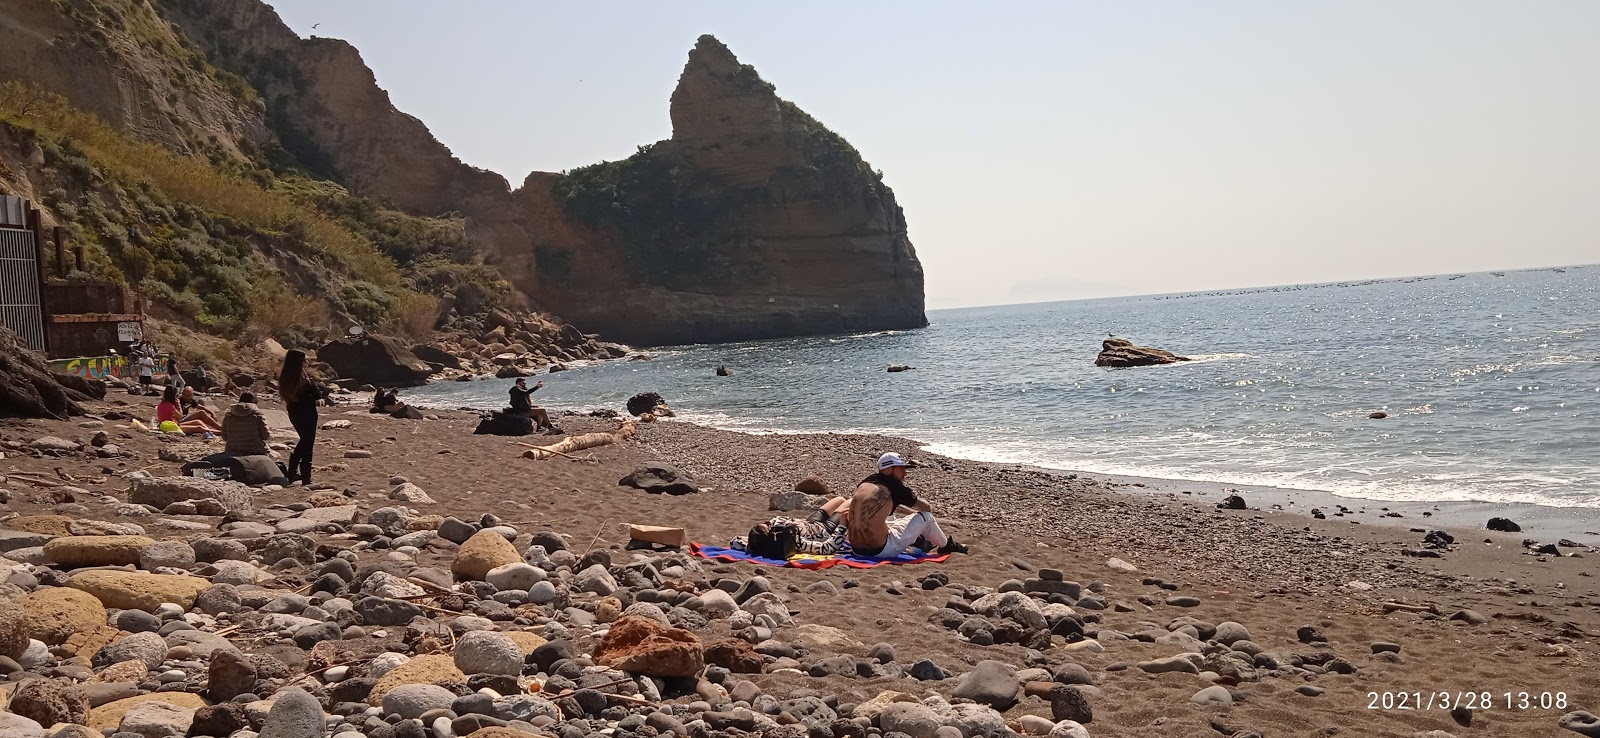 Foto av Spiaggia di via Nisida med kort rak strand